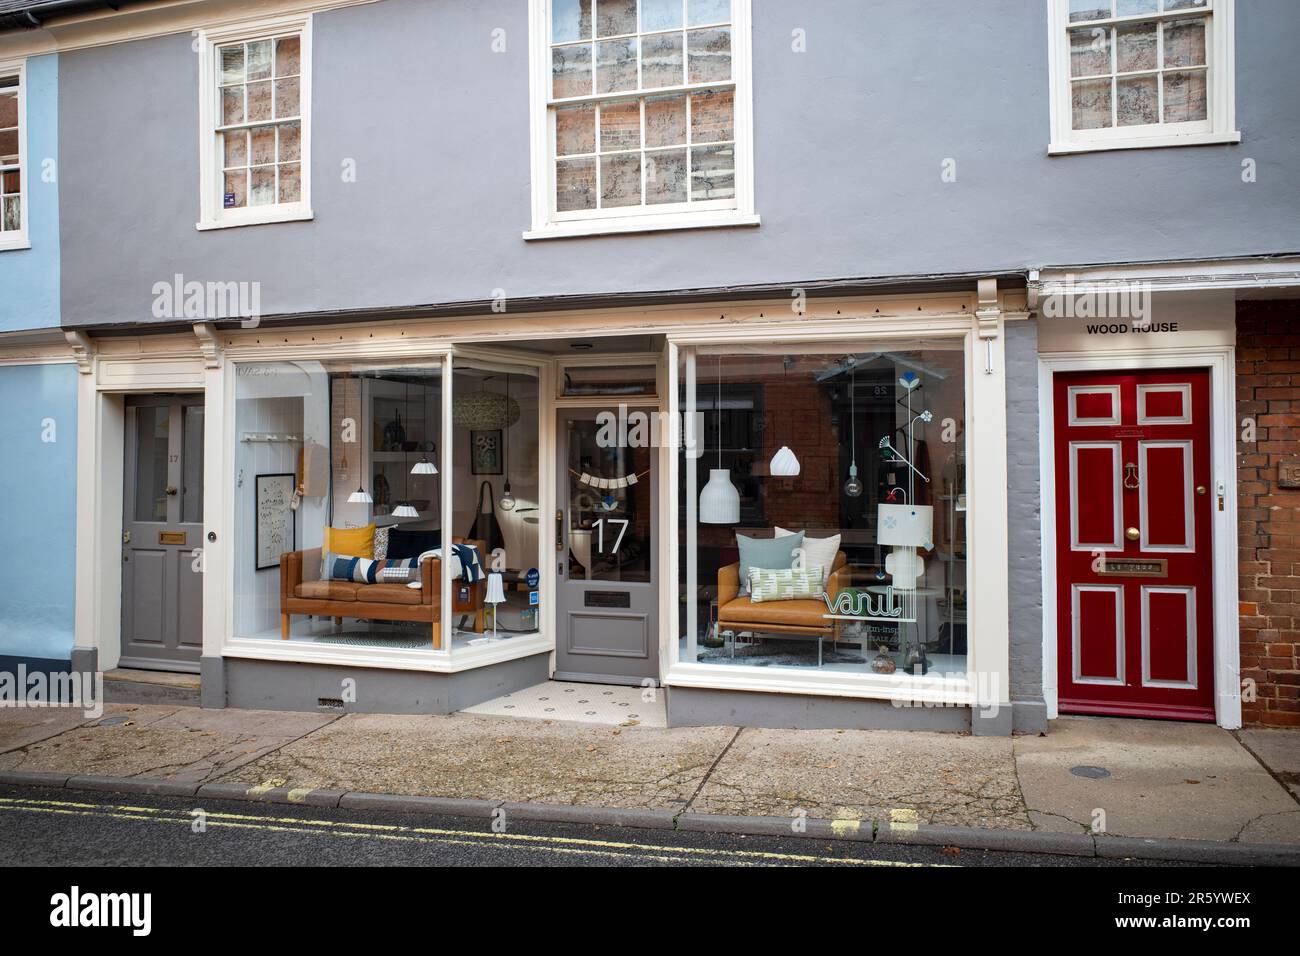 Vanil home furnishing independent shop Woodbridge Suffolk UK Stock Photo